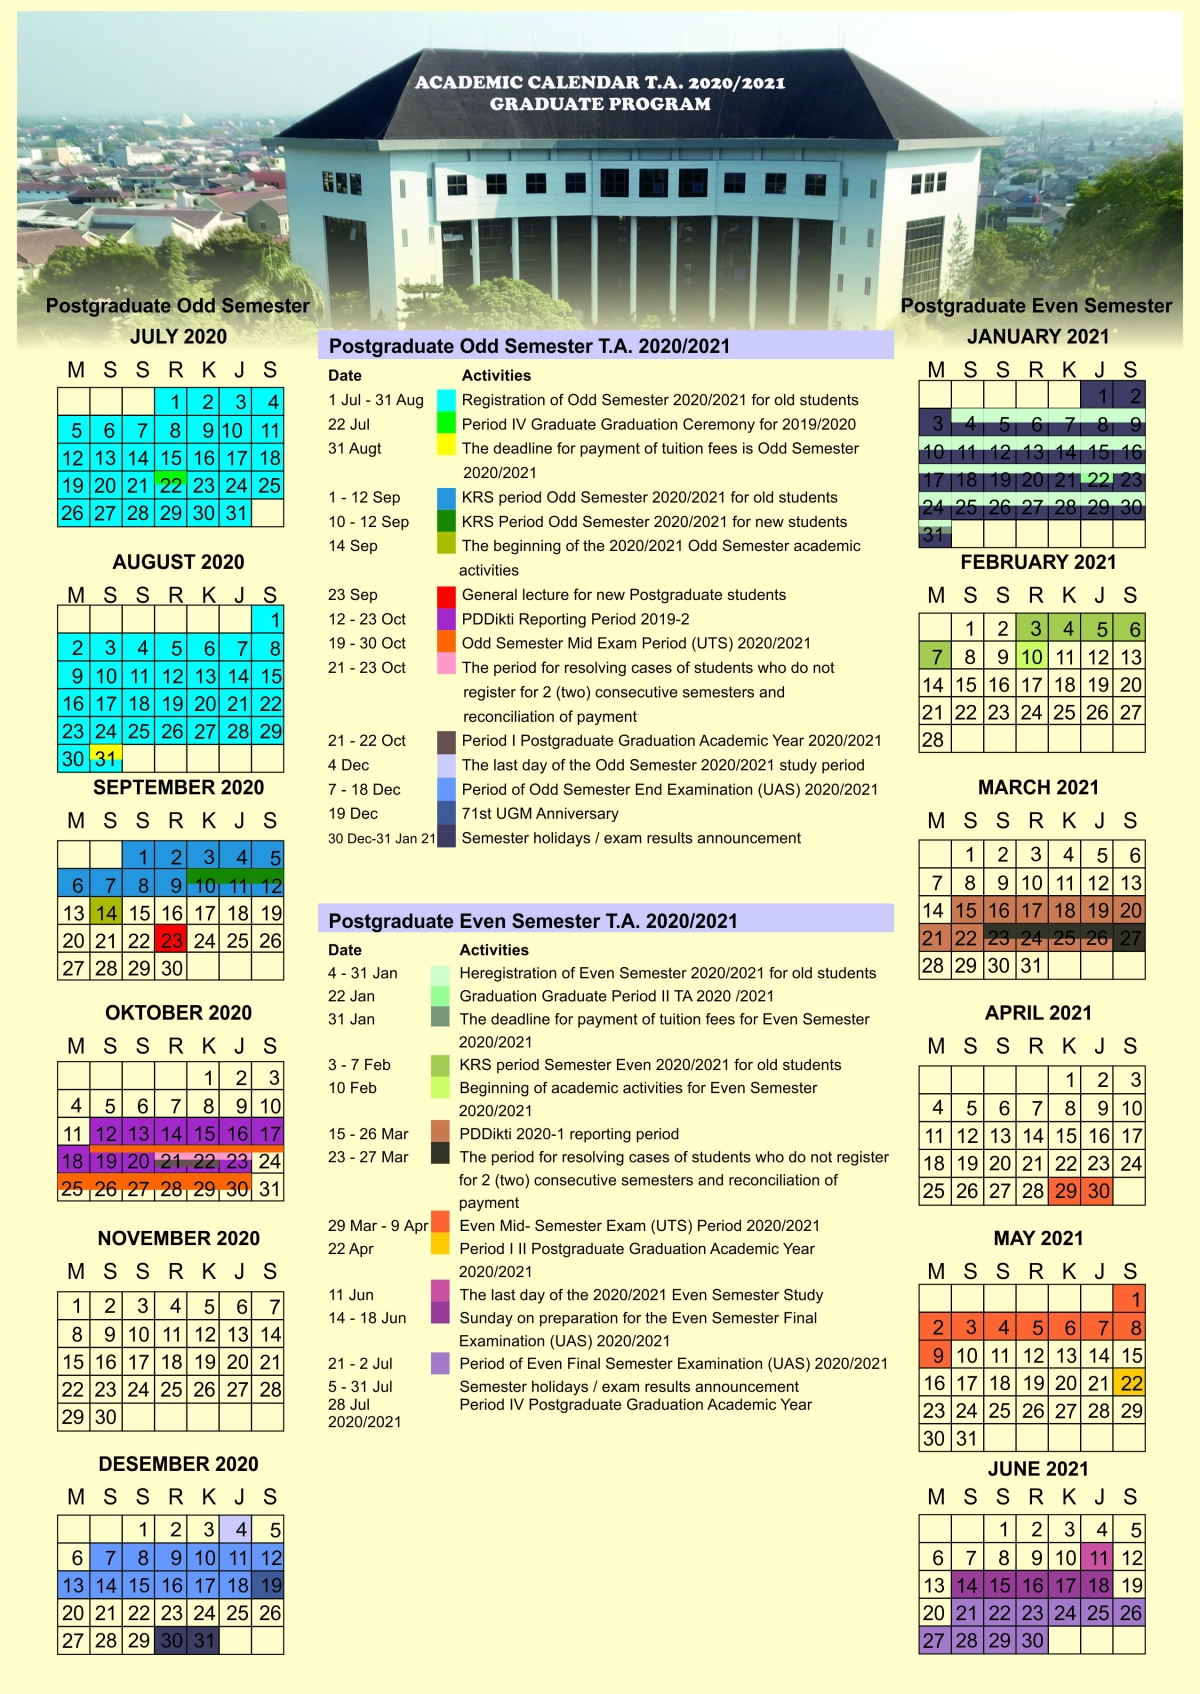 Academic Calendar 2020 2021 The Graduate School Of Universitas Gadjah Mada